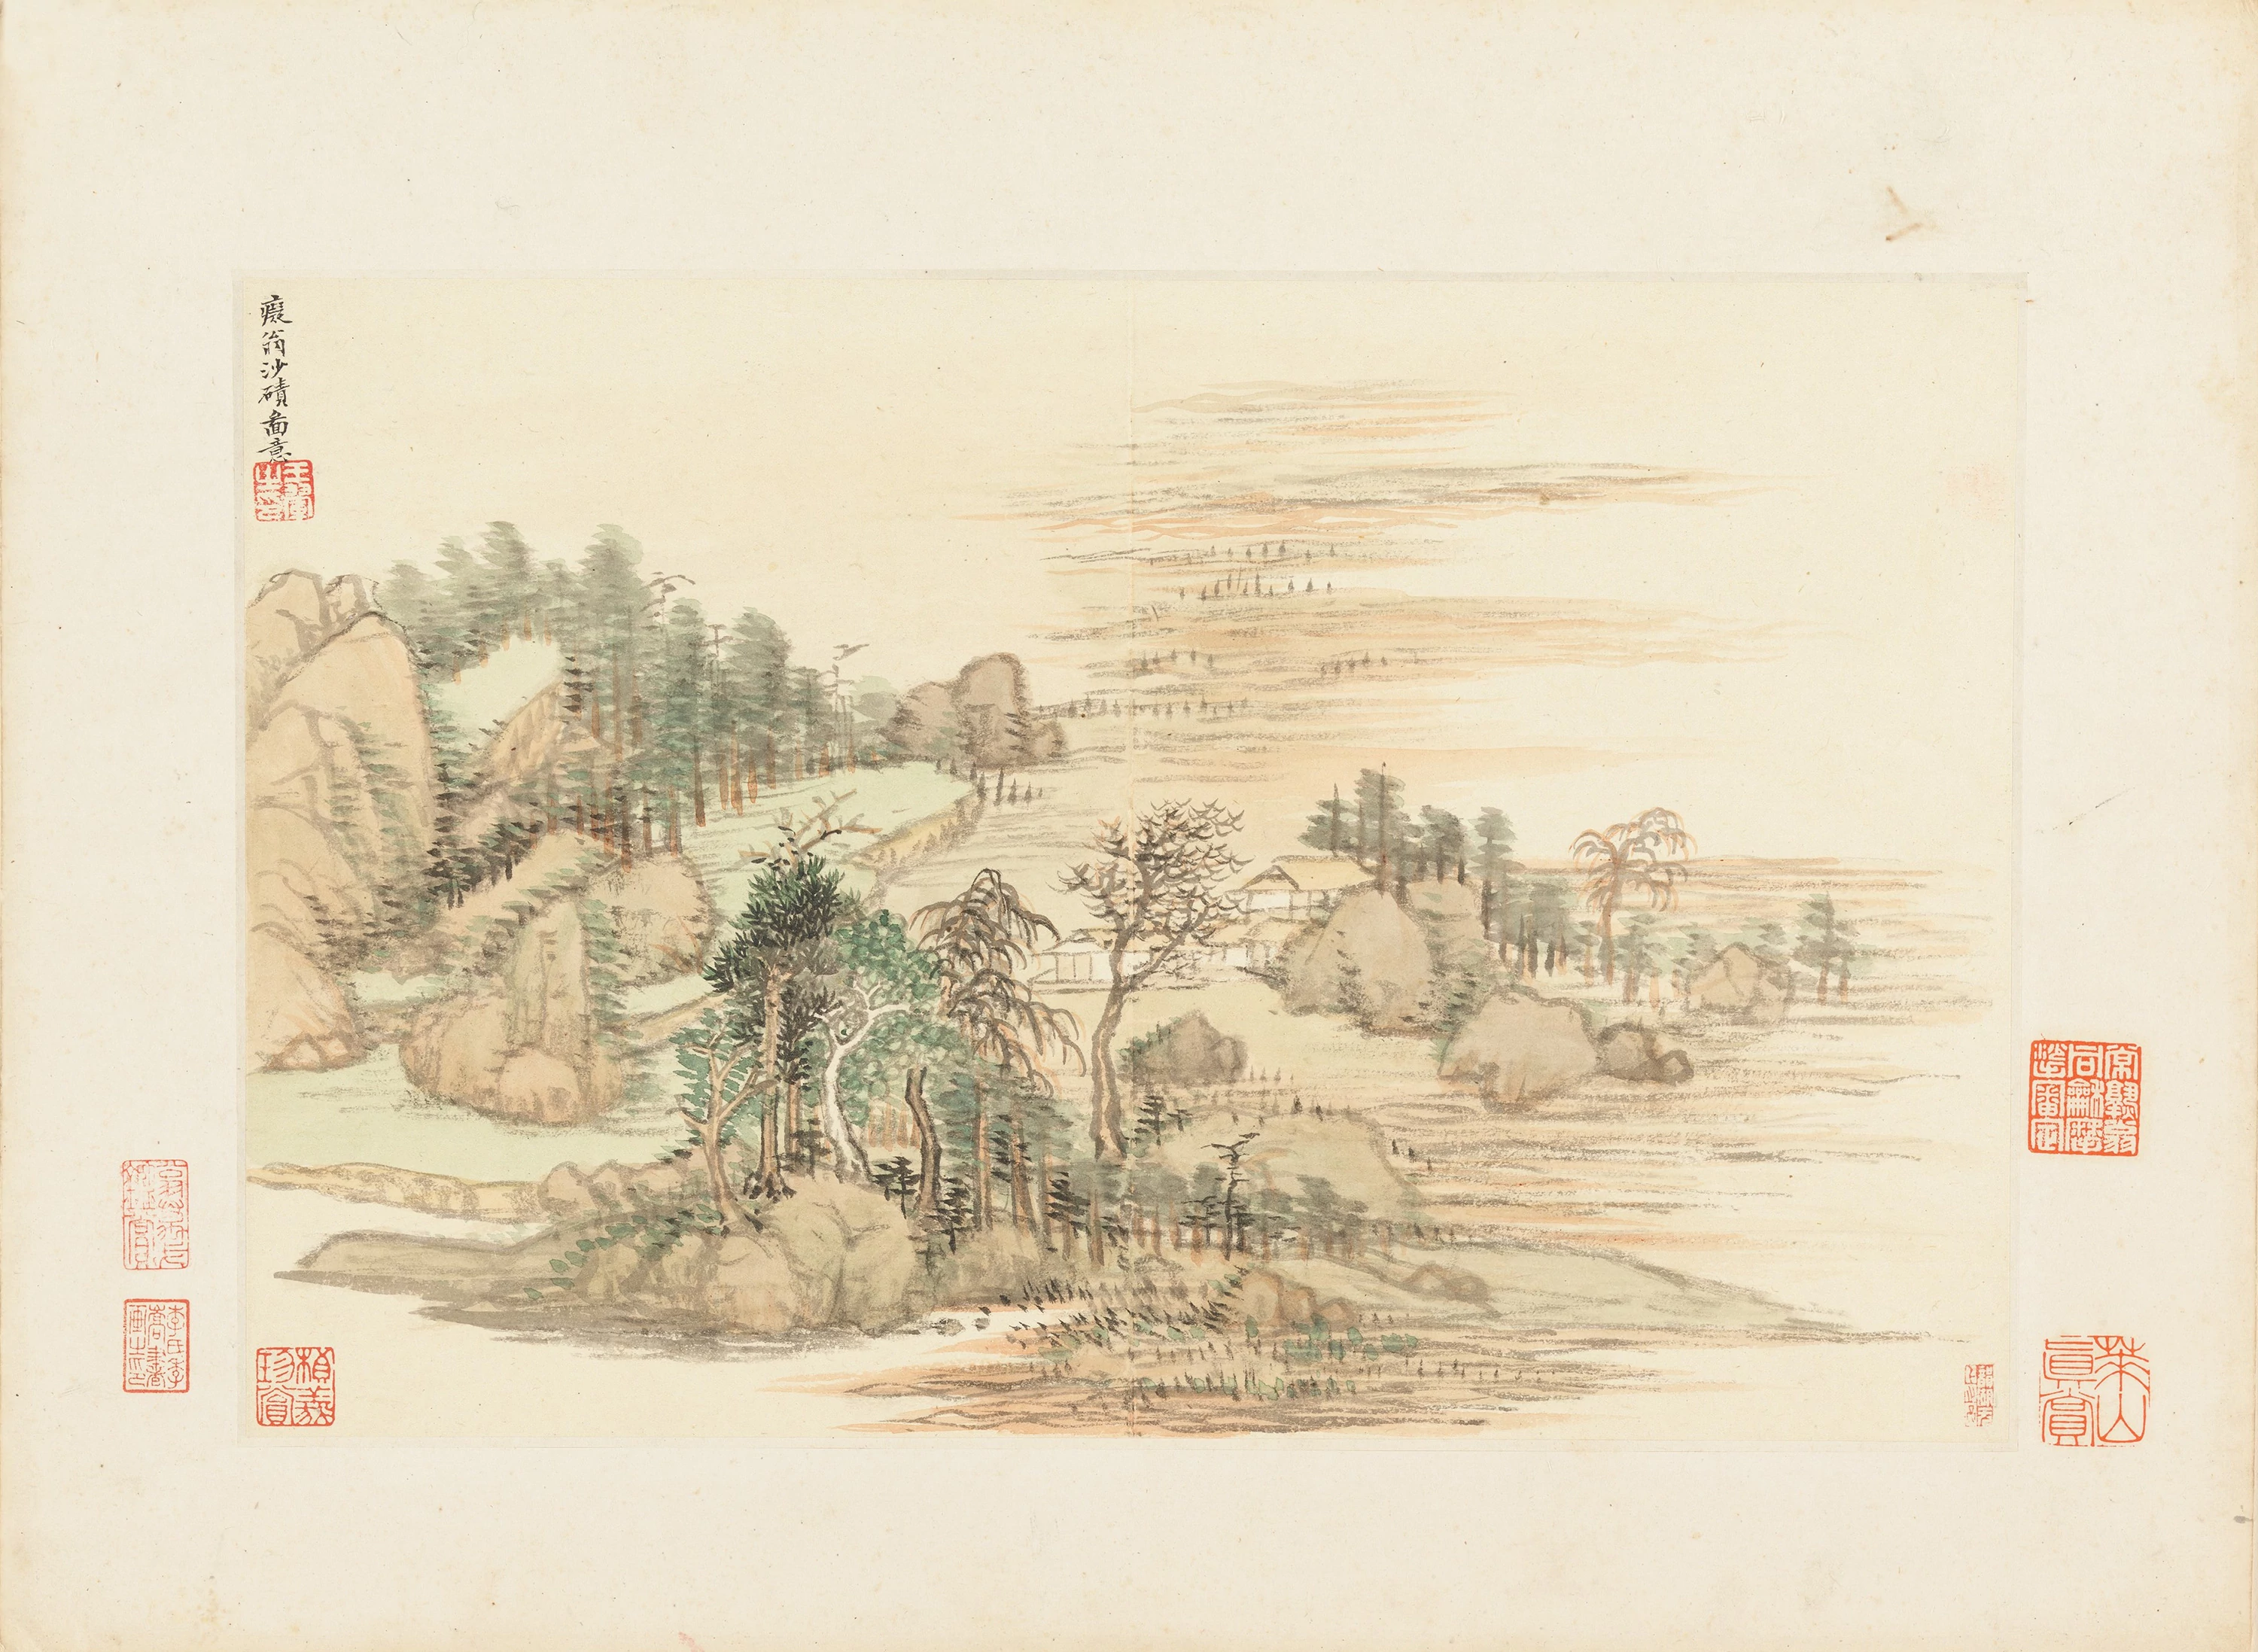 Sand Banks and Rocks, after Chiweng, Wang Hui (王翚)